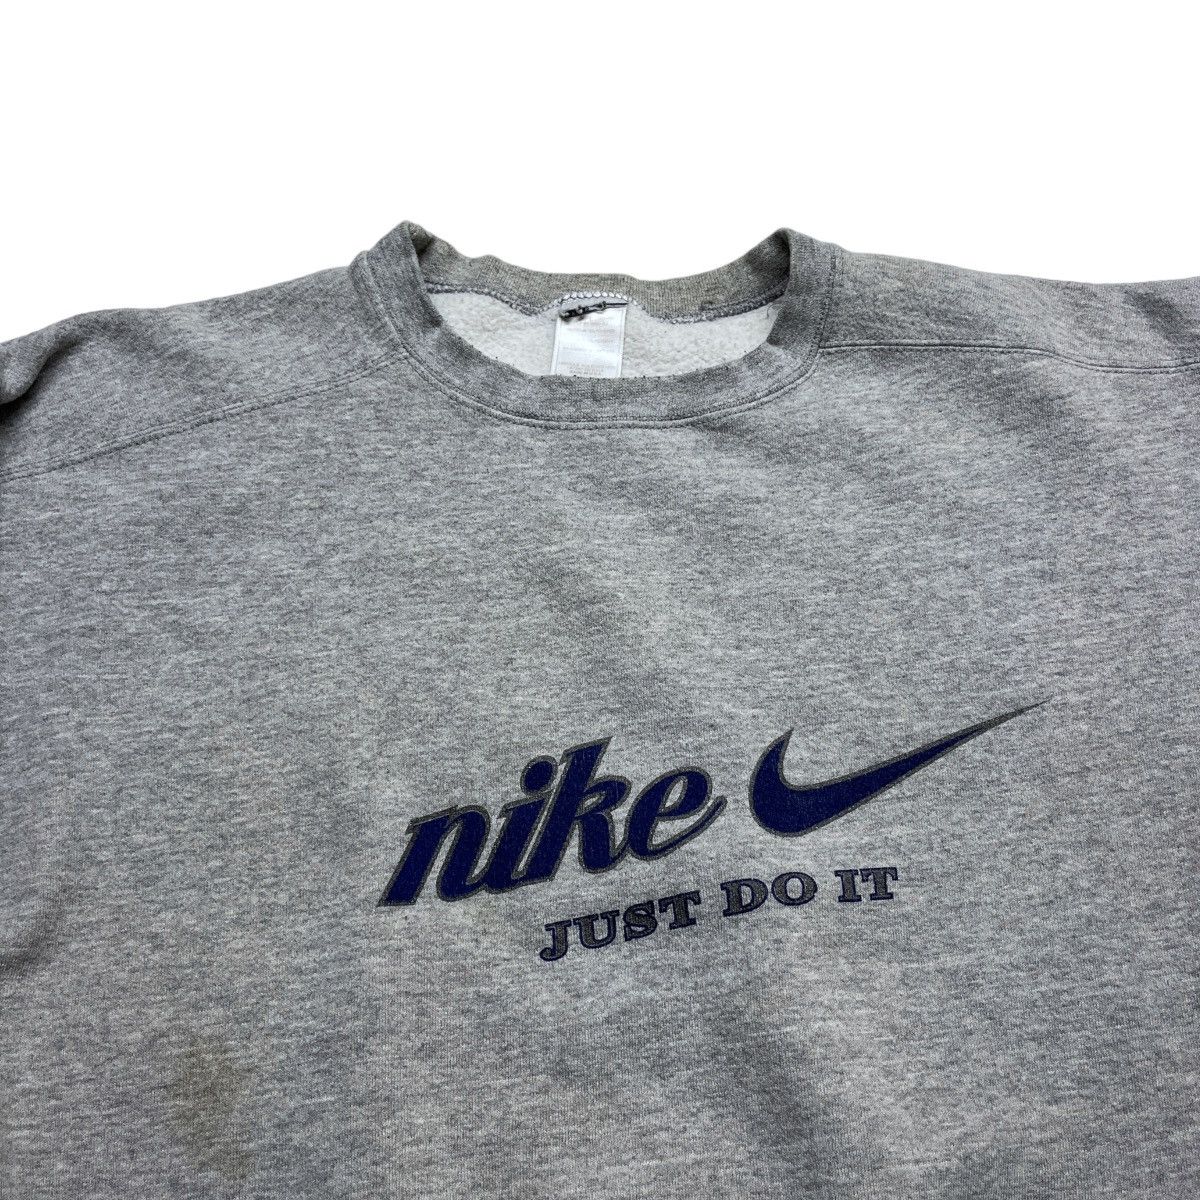 Nike 90s Nike Just Do It Sweatshirt Size US L / EU 52-54 / 3 - 2 Preview